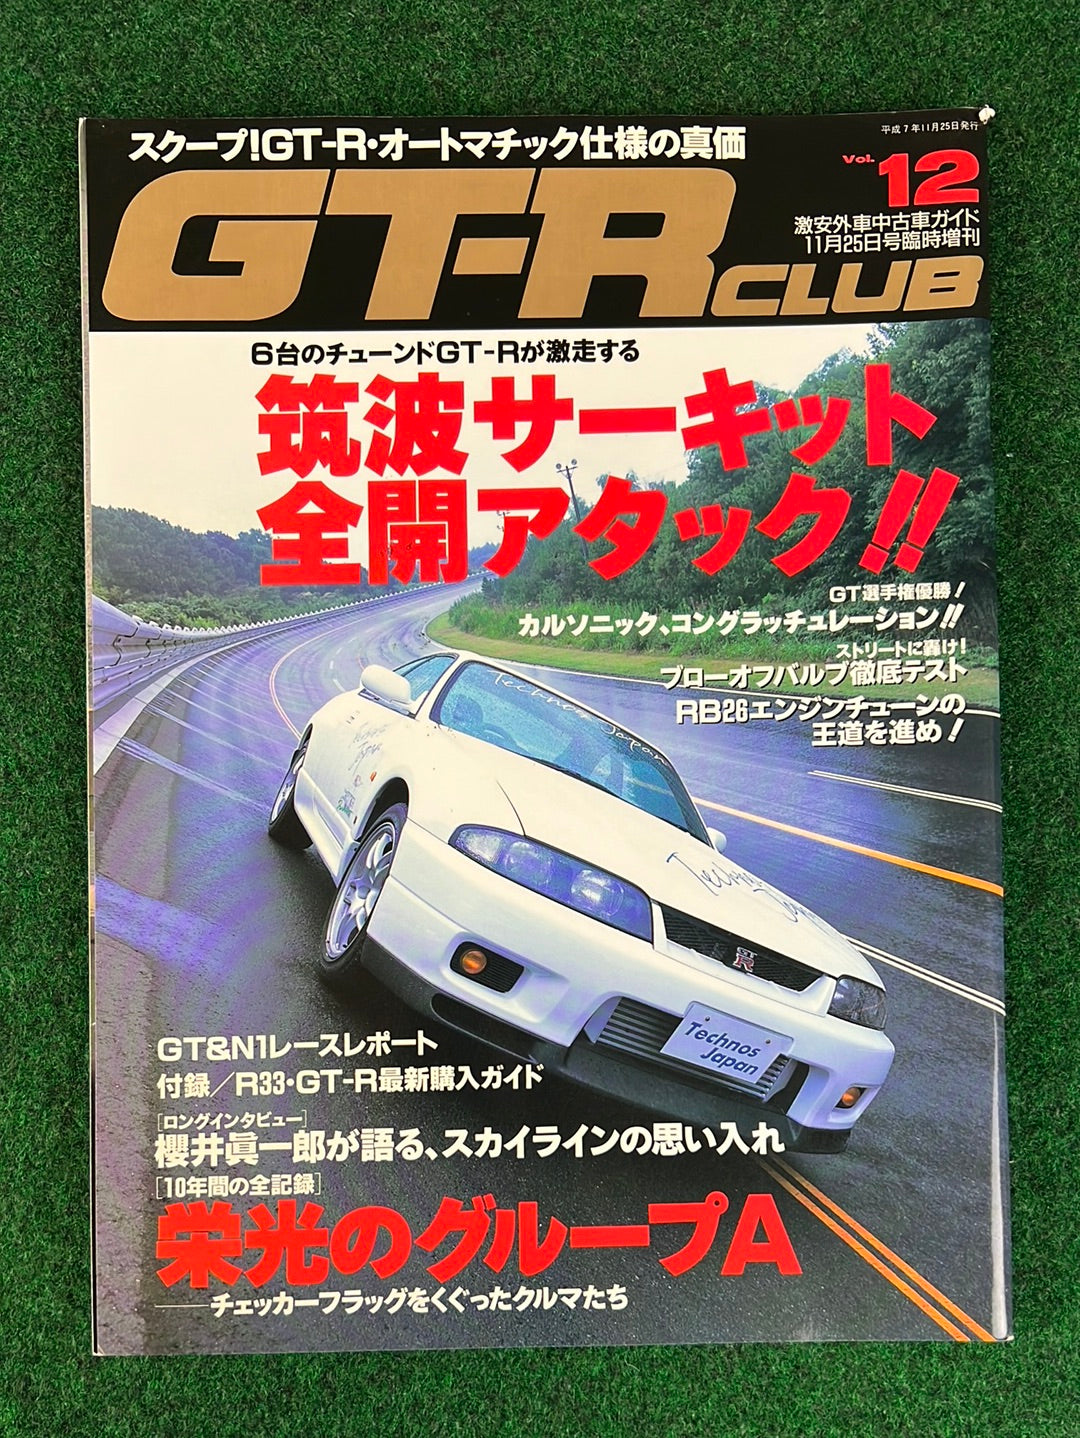 GT-R Club Magazine - Vol. 12